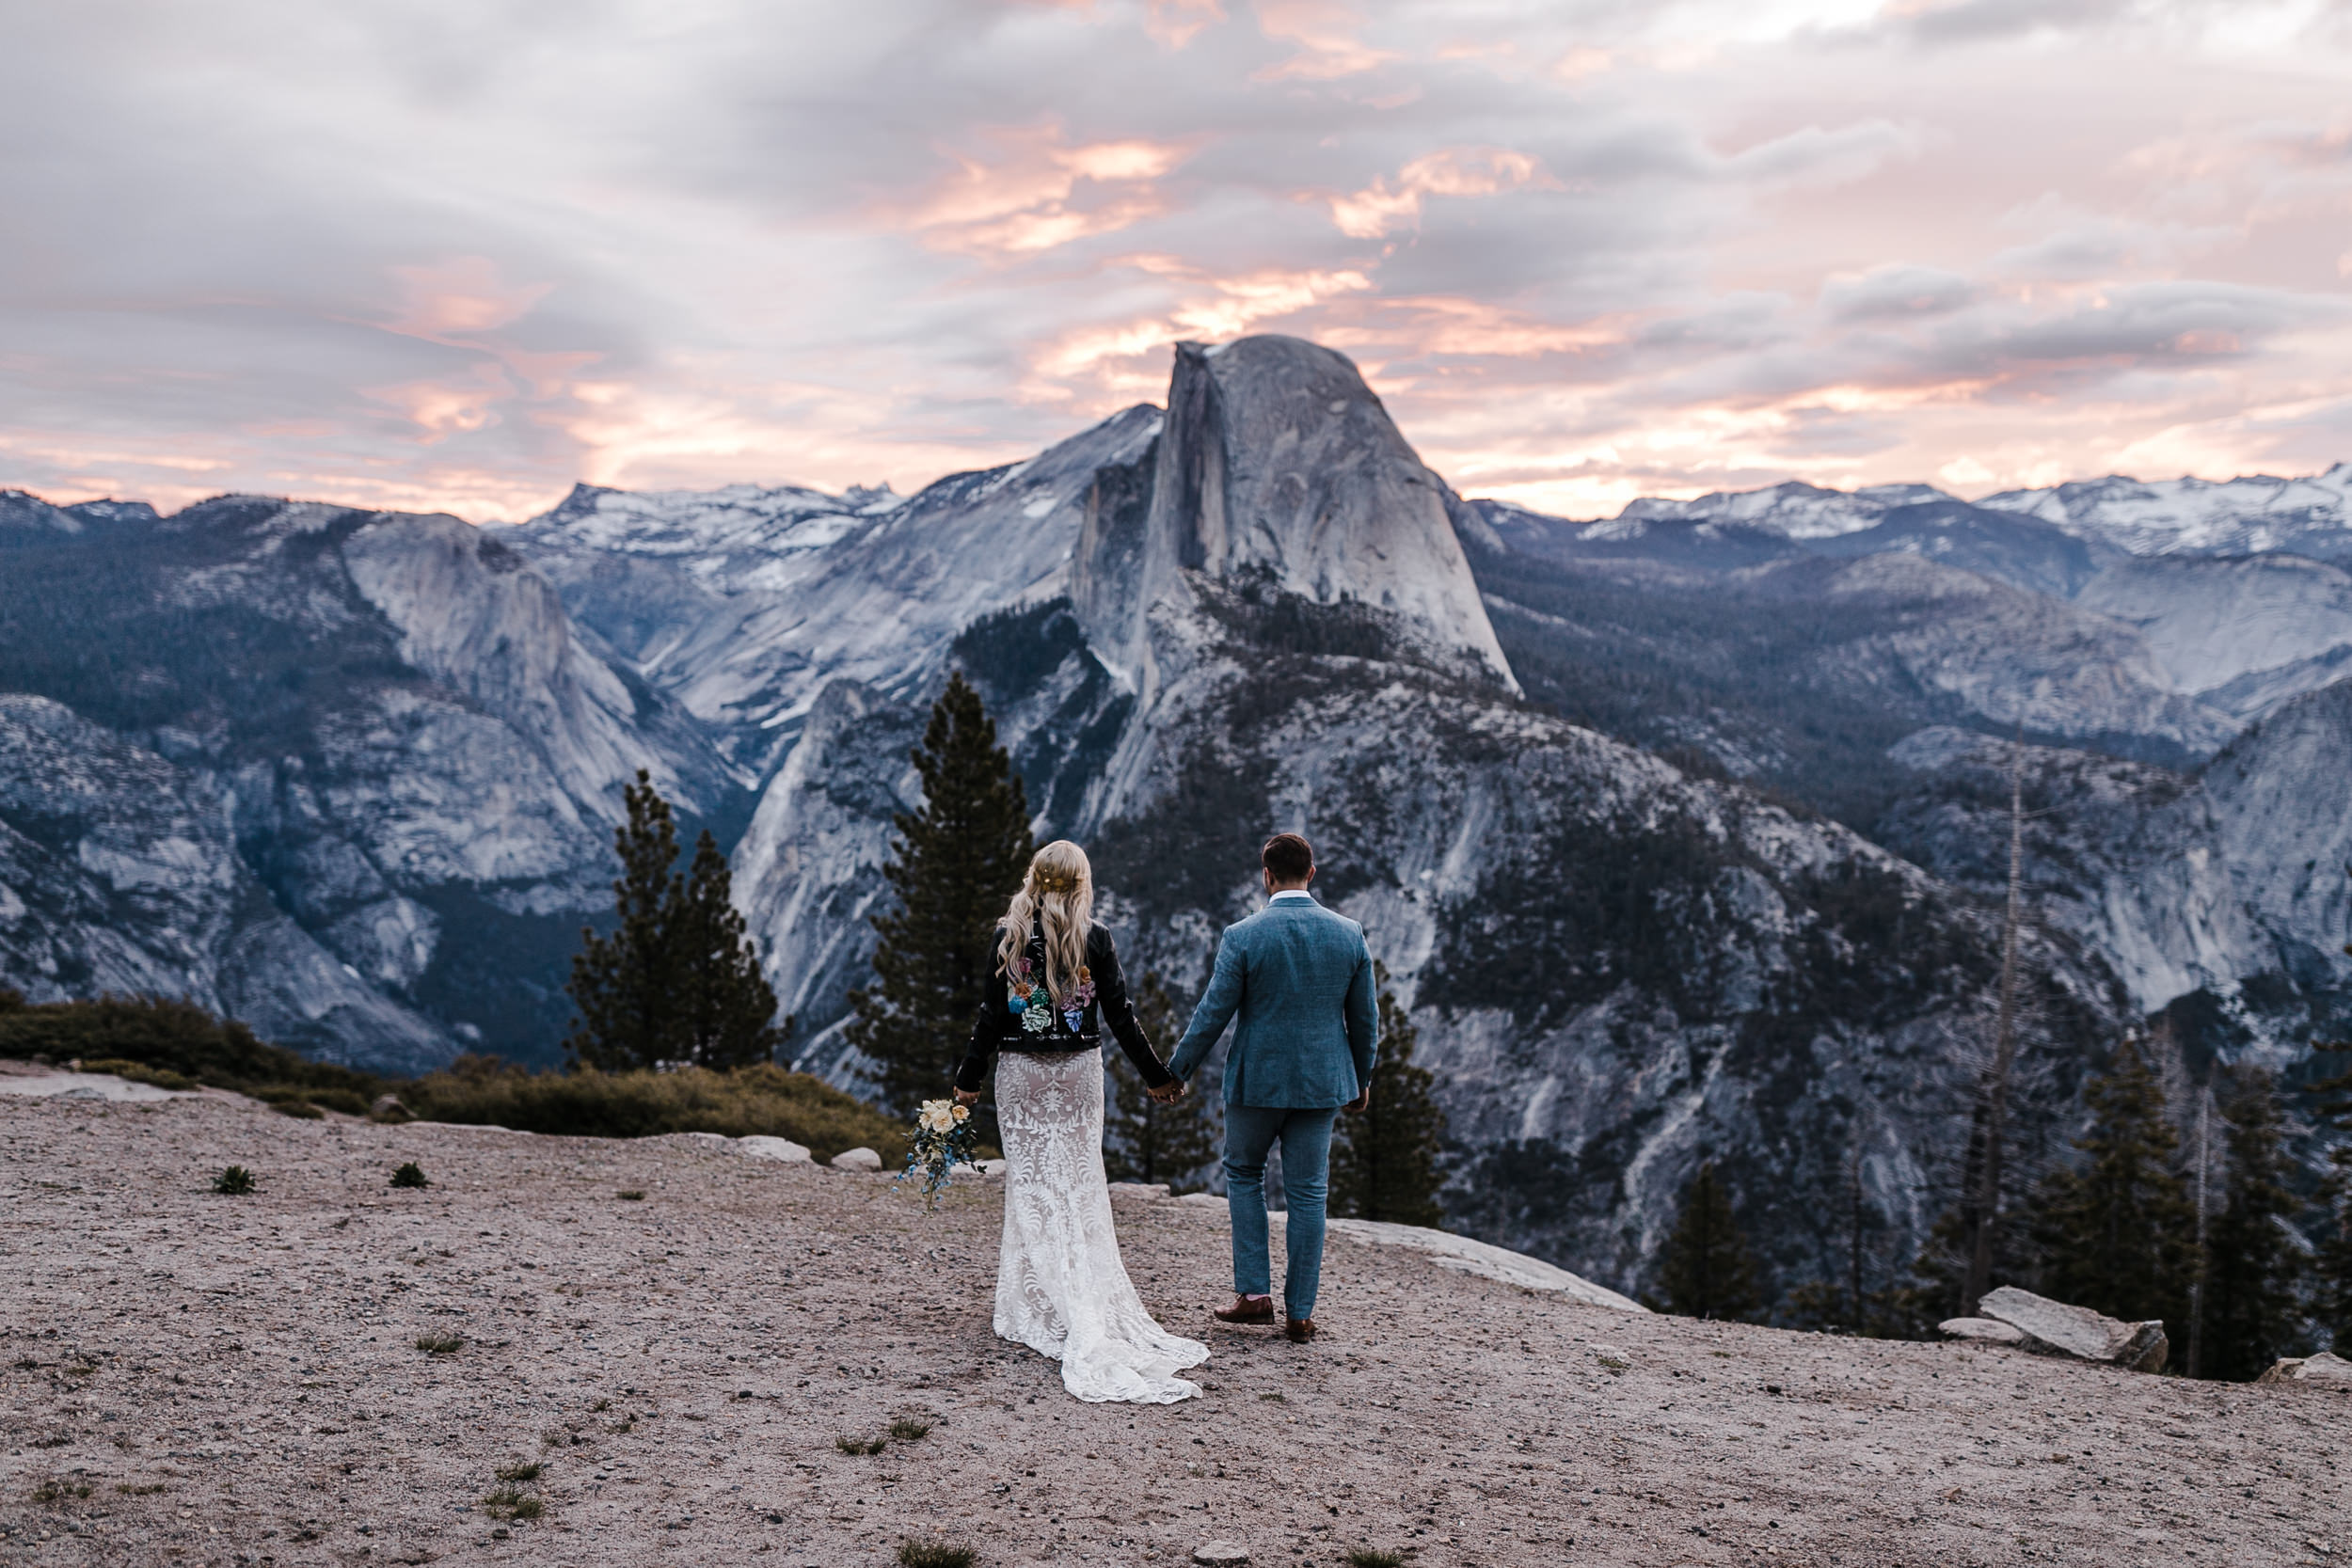 Erika + Grant’s intimate Yosemite National Park destination wedding + romantic backyard reception under twinkle lights | glacier point sunrise first look | the hearnes adventure photography 